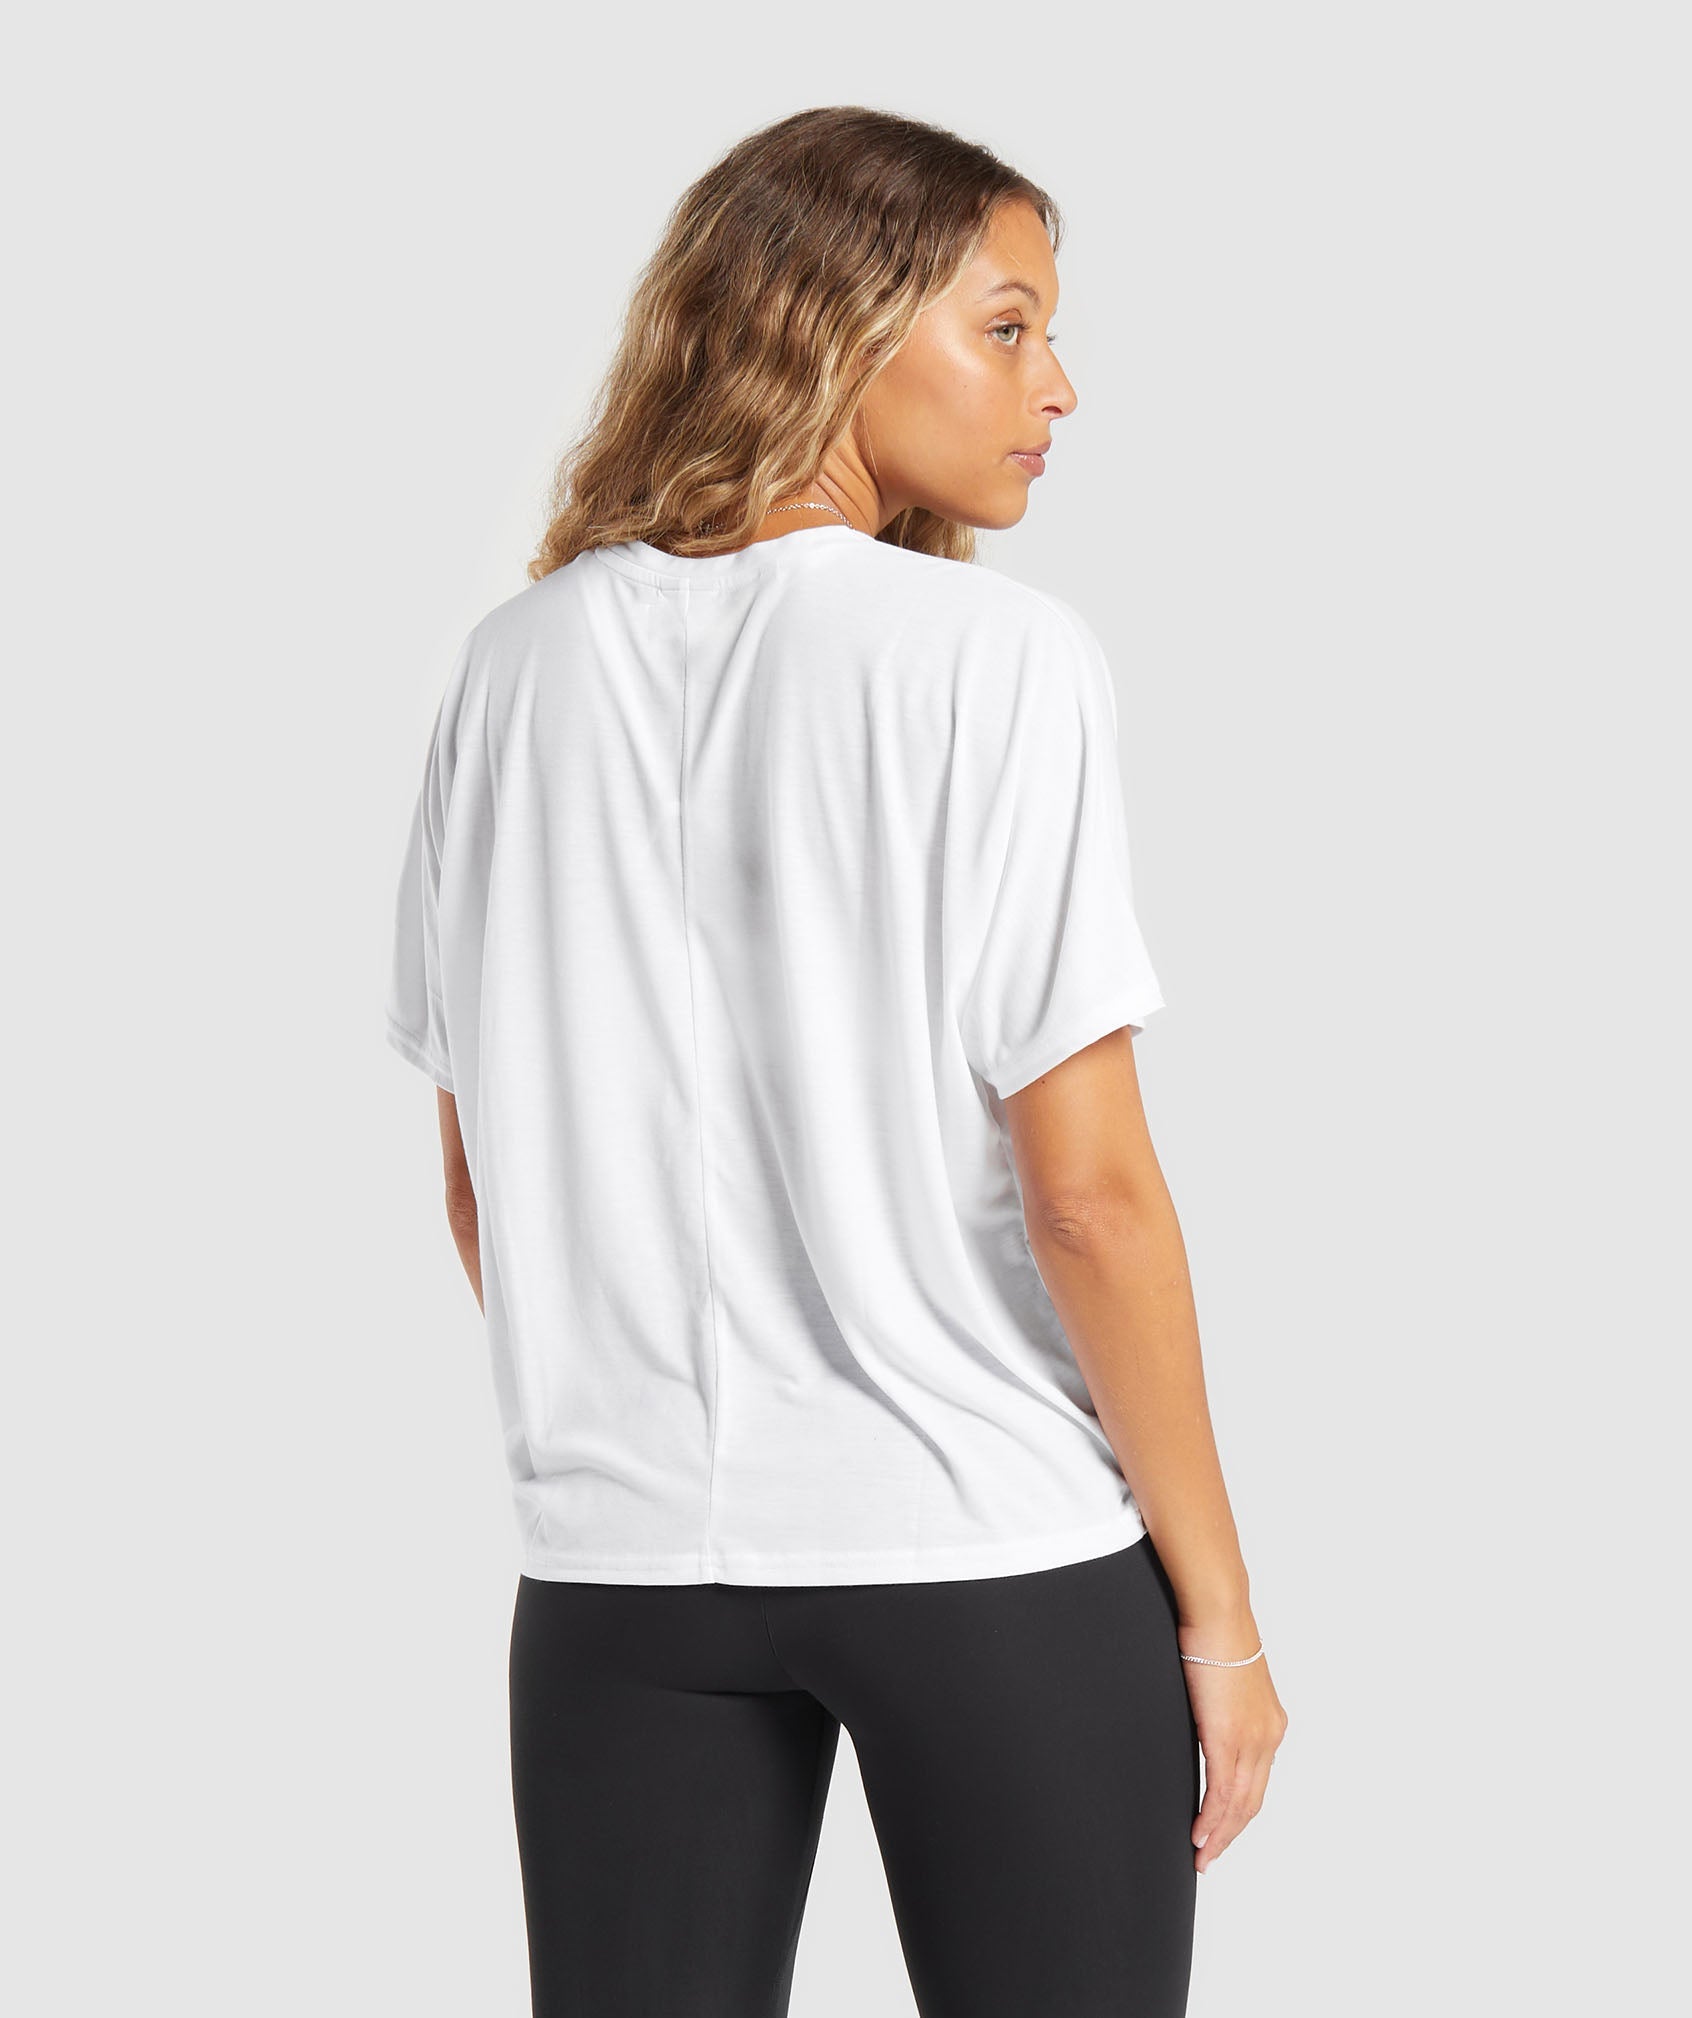 Super Soft T-Shirt in White